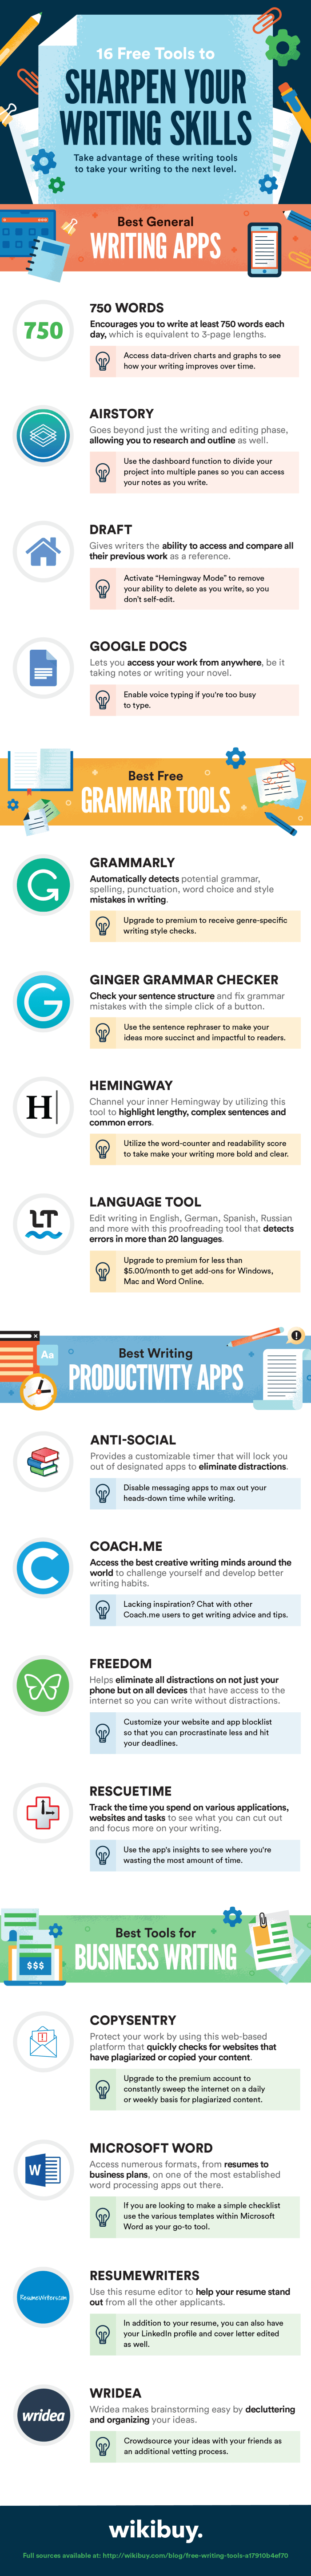 improve writing skills infographic